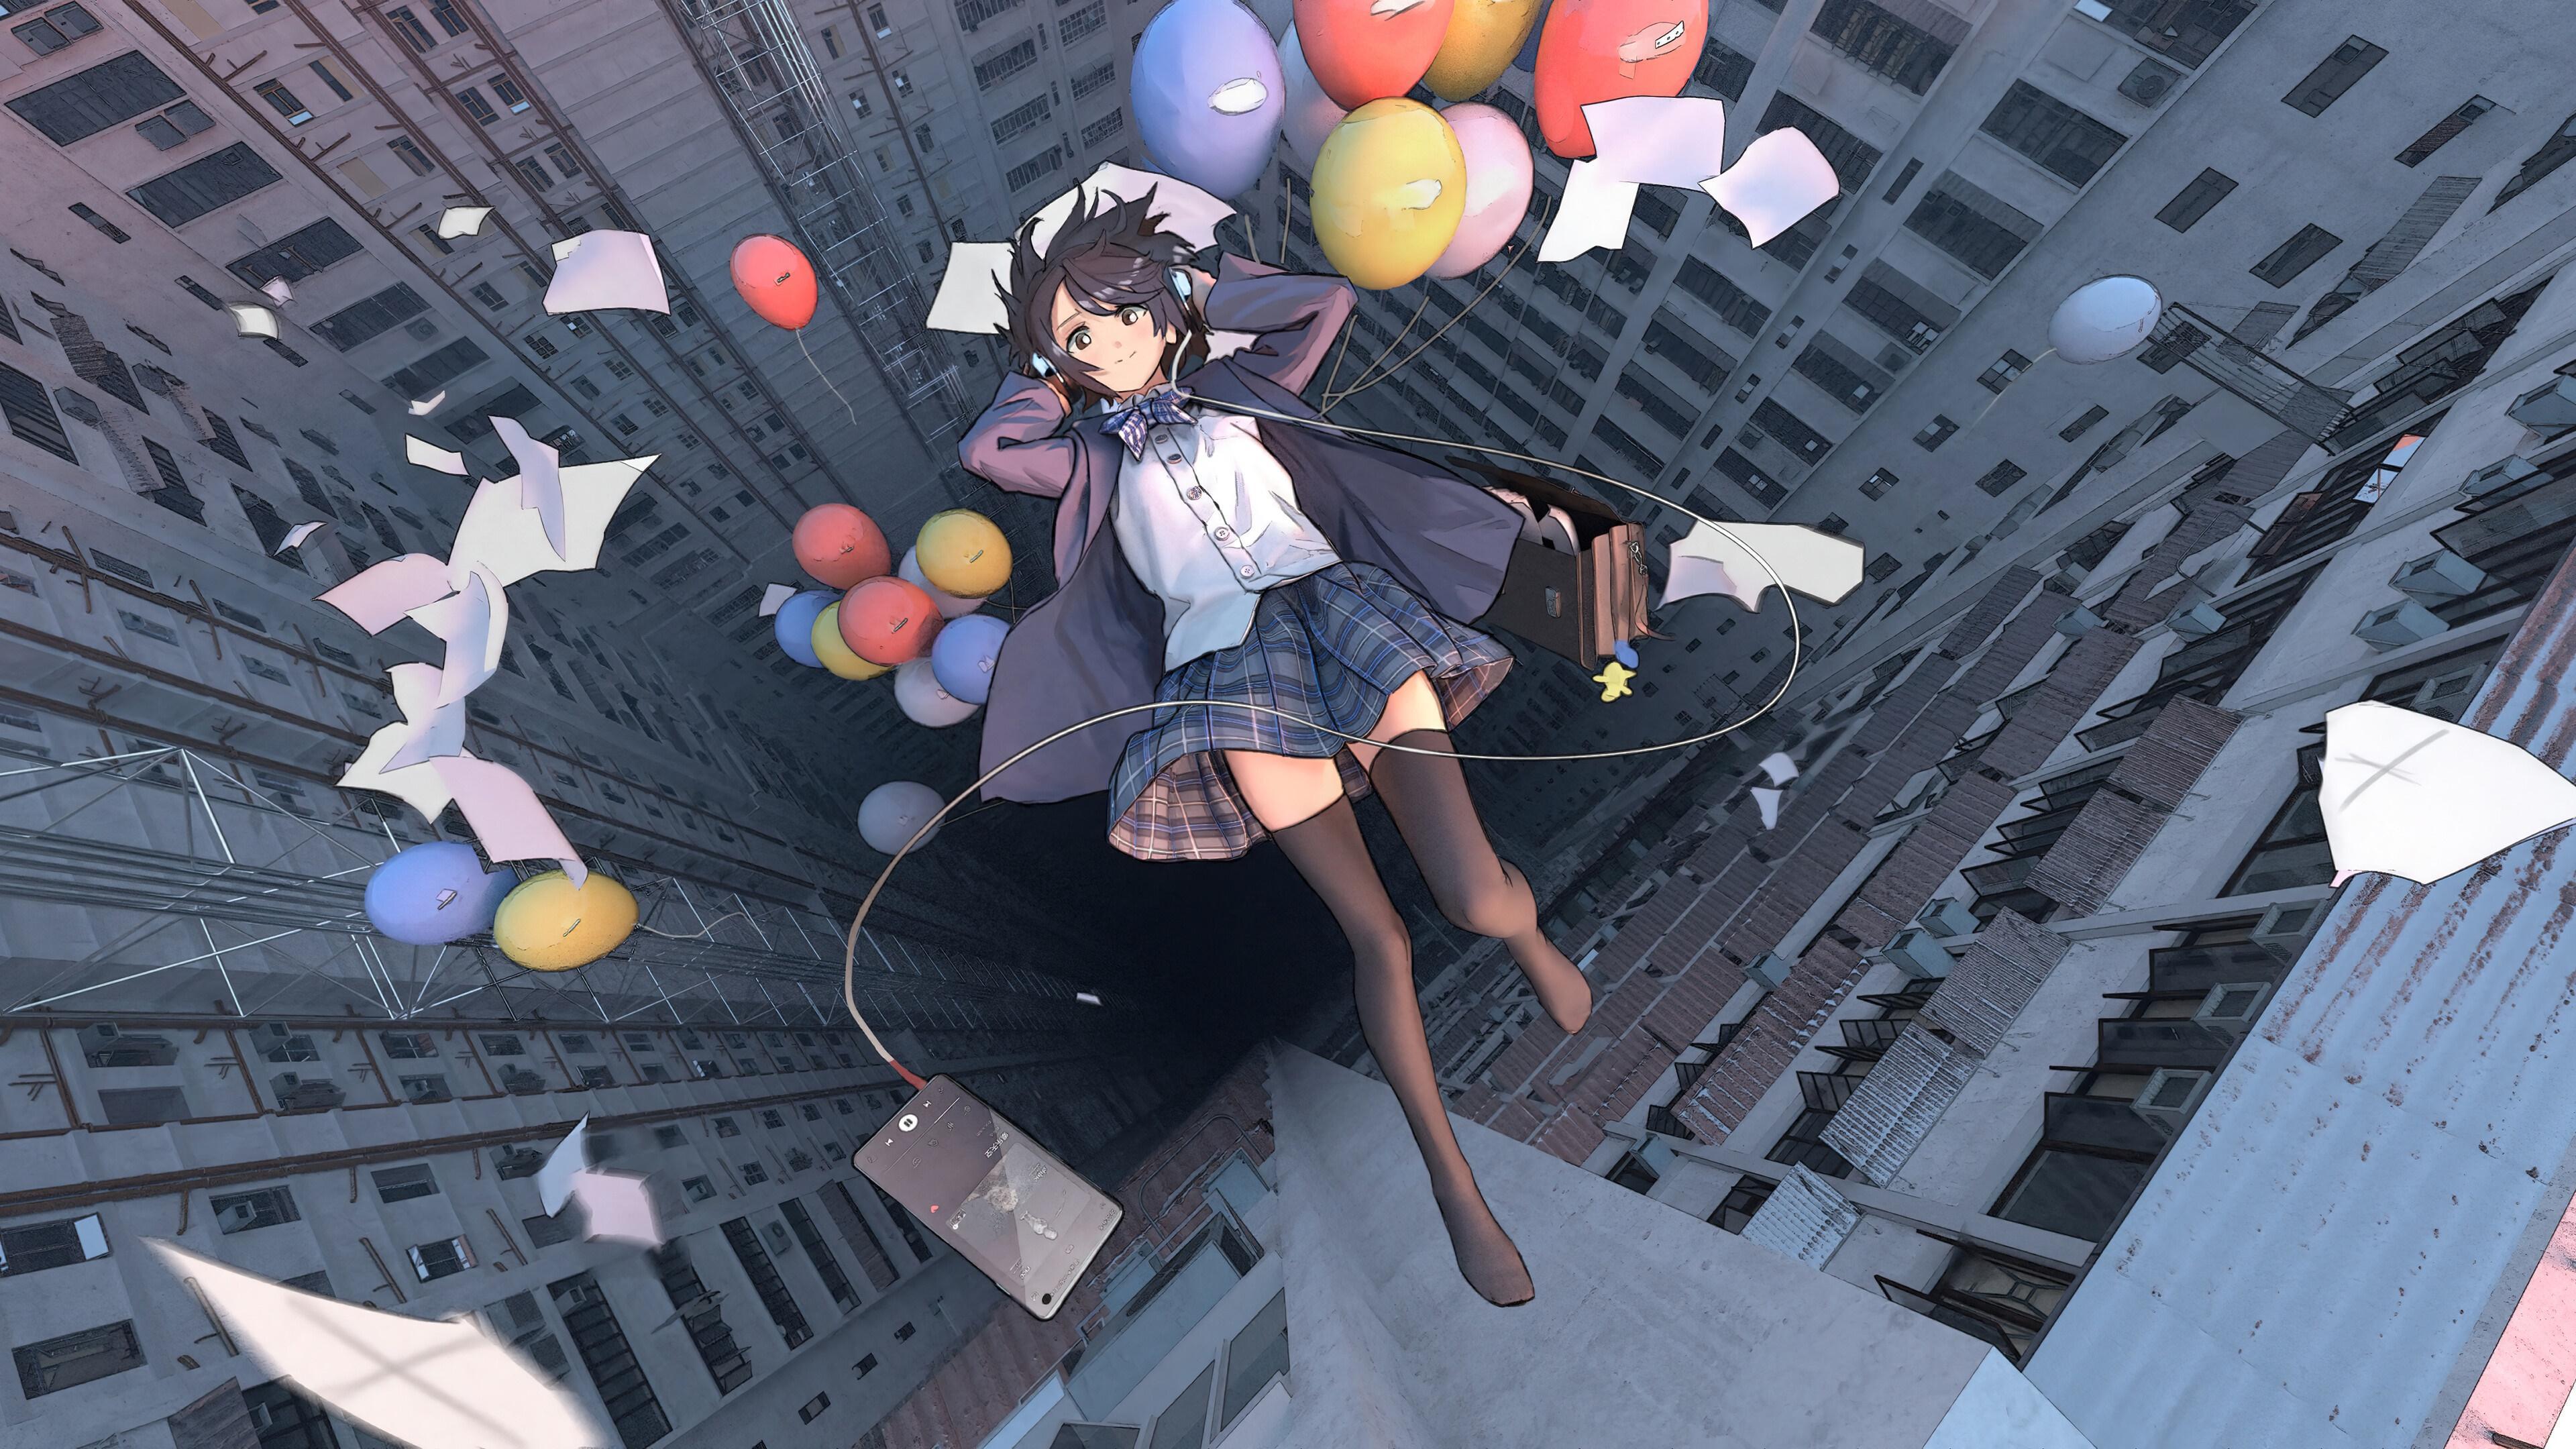 HD wallpaper, School, Falling, Anime, Balloons, Student, 4K, Girl, Hd, Uniform, Wallpaper